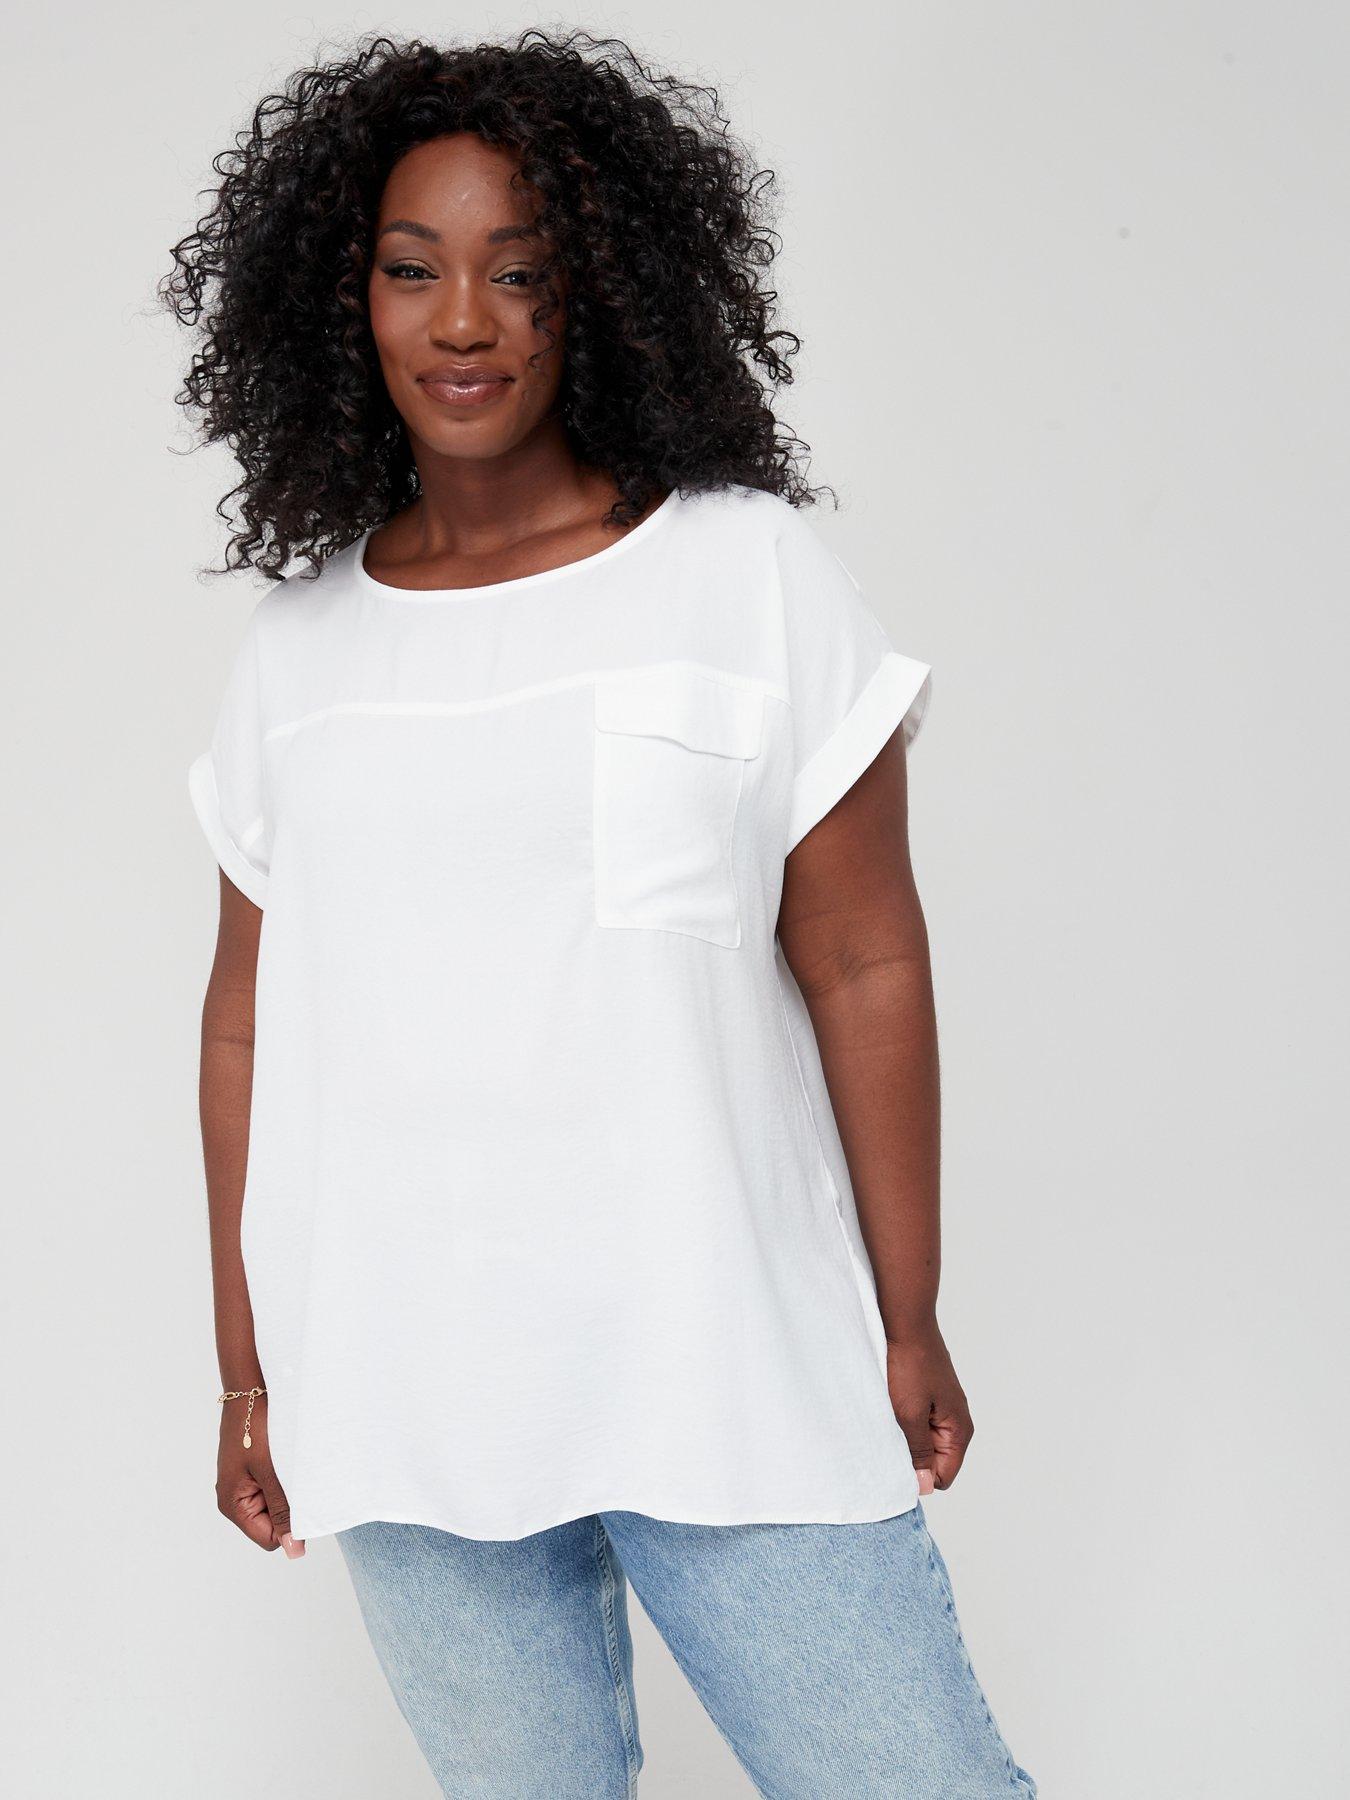 FarJing Plus Size Women Fashion Casual V-Neck Button Pocket Three Quarter Sleeves Blouse Shirt Tops 